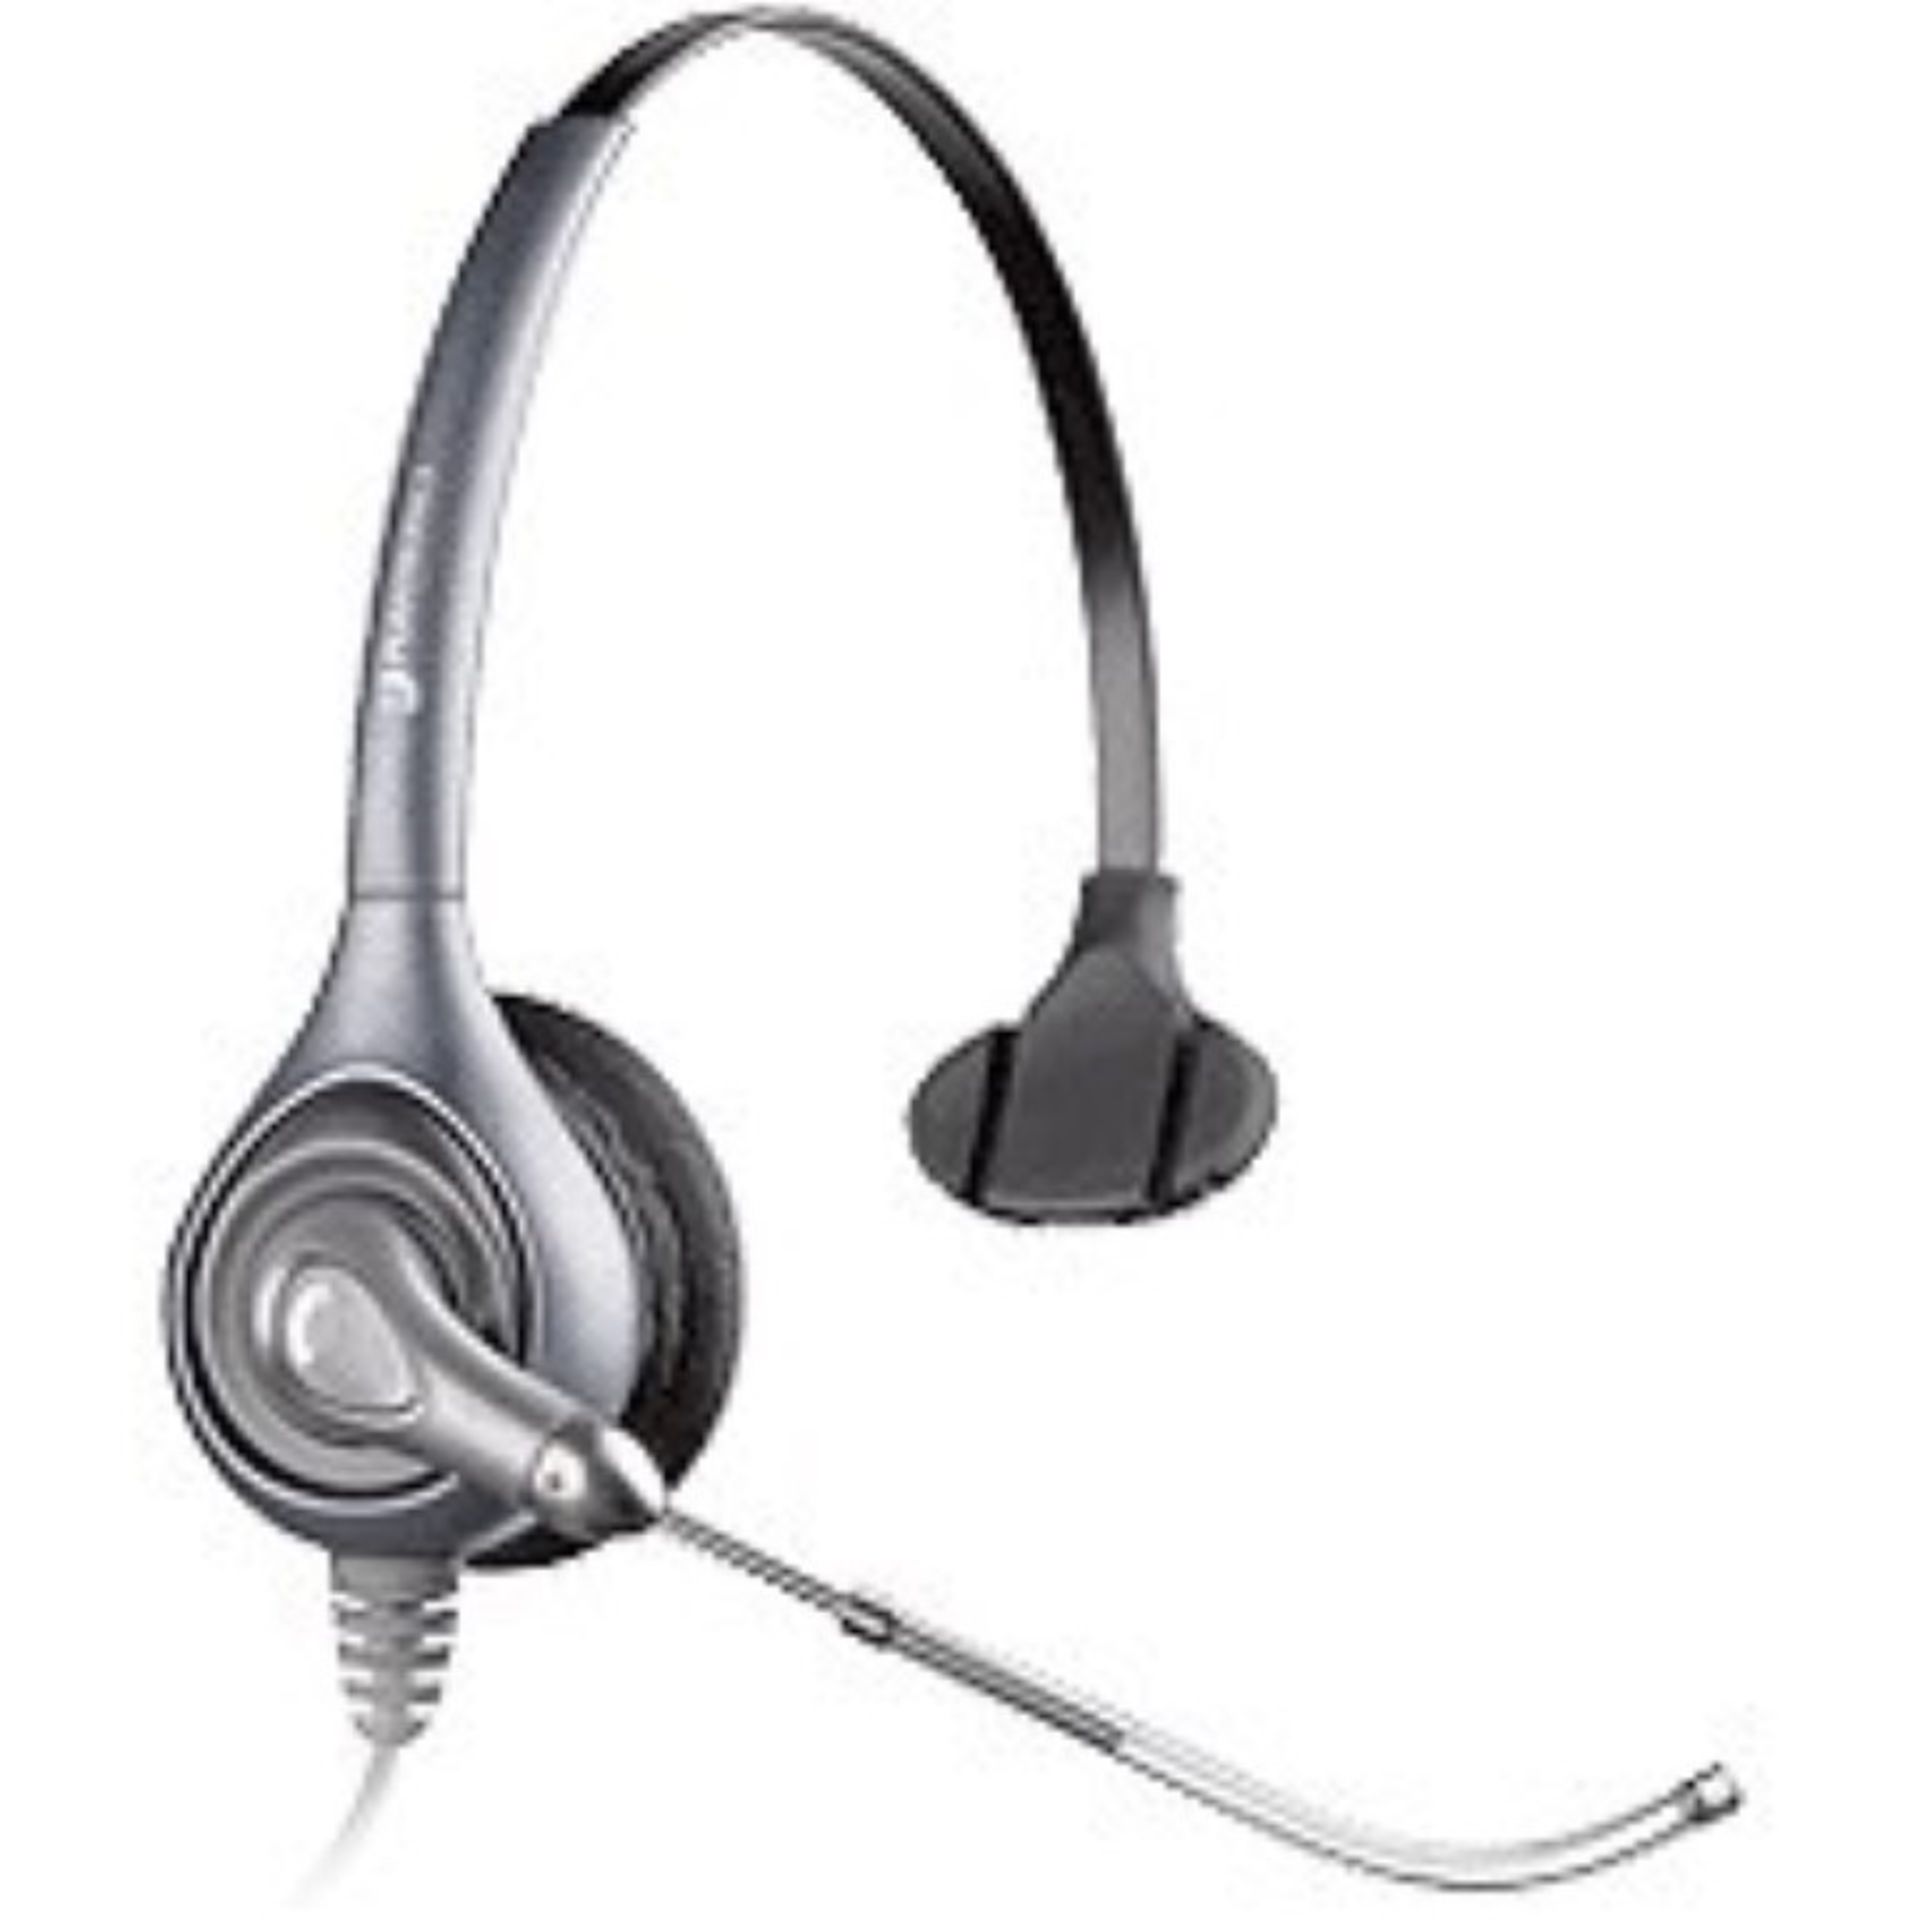 1 x Plantronics H351 SupraPlus SL Monaural Voicetube Telephone Headset - Brand New Boxed -